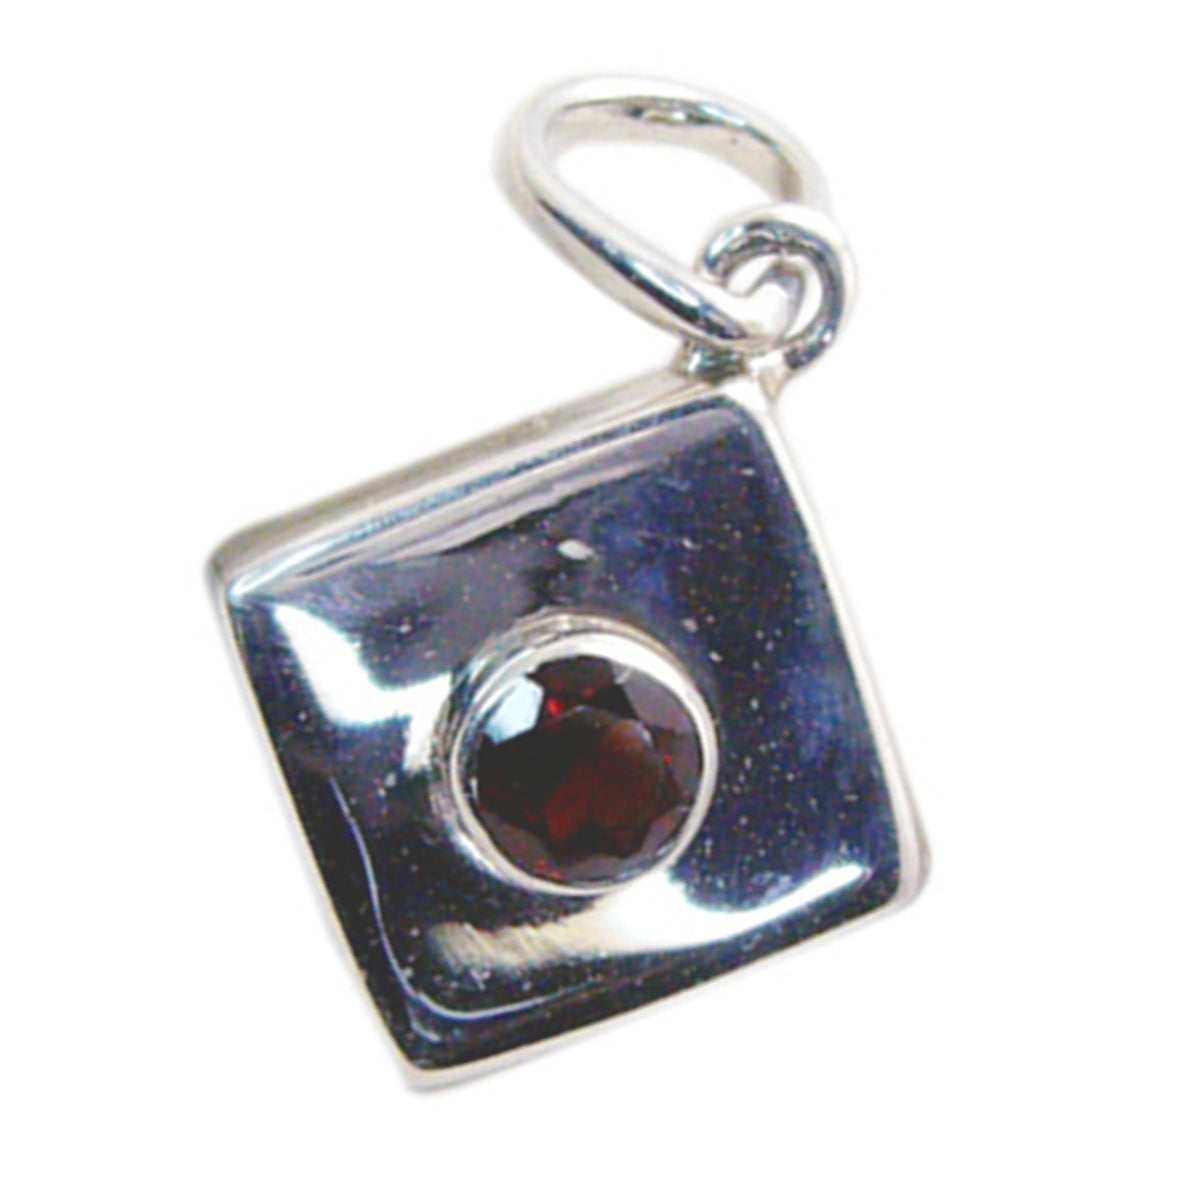 Riyo Lovely Gemstone Round Faceted Red Garnet 951 Sterling Silver Pendant Gift For Teachers Day